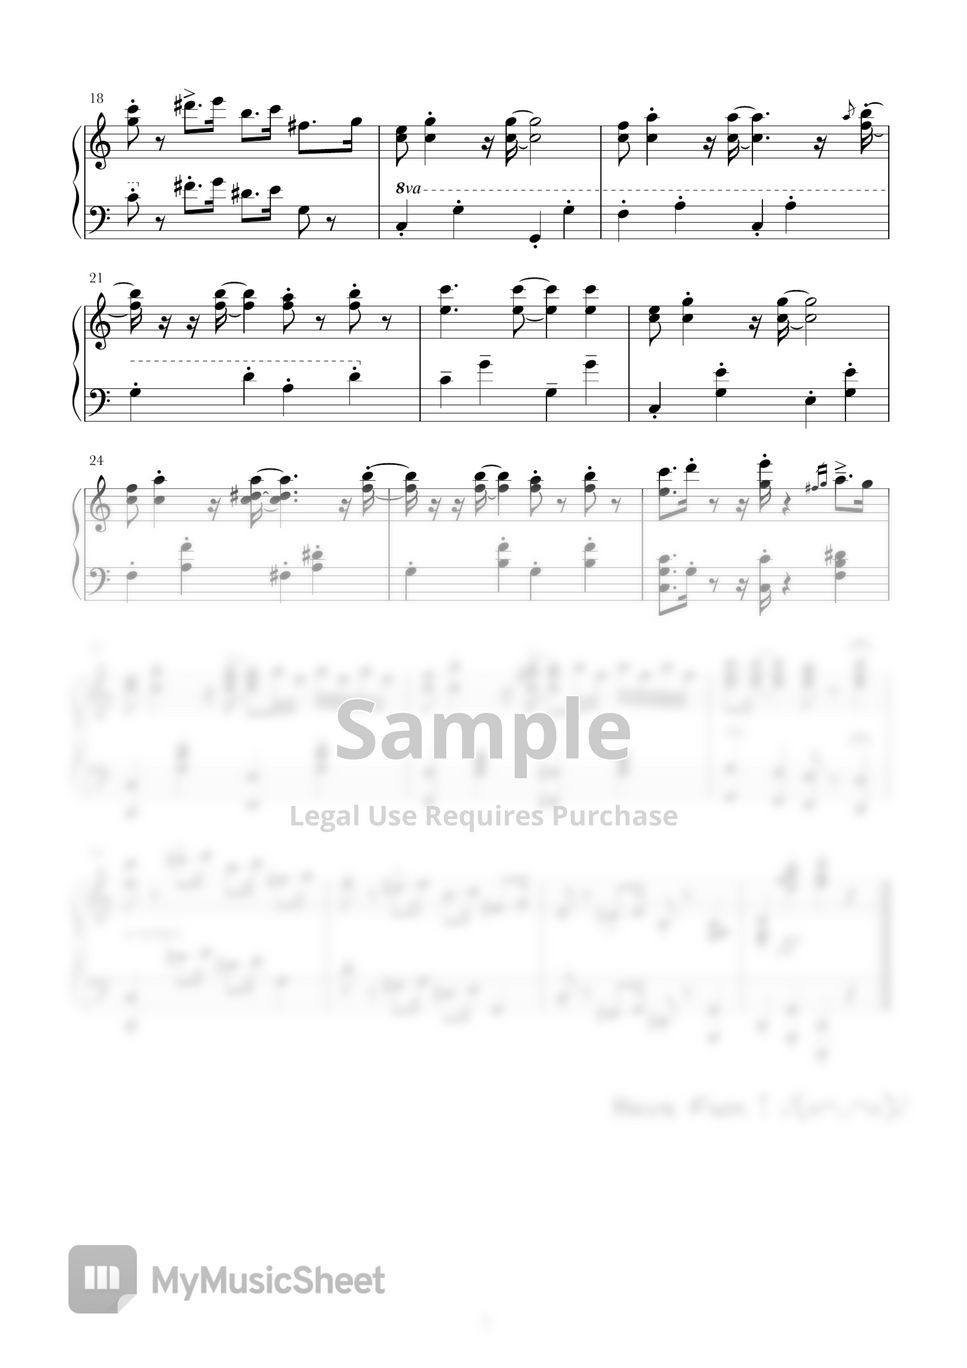 Joseph Eastburn Winner - Little Brown Jug - Forest of Piano Ver. (Re-rhythm) by Jane.C.(Jane Donde)